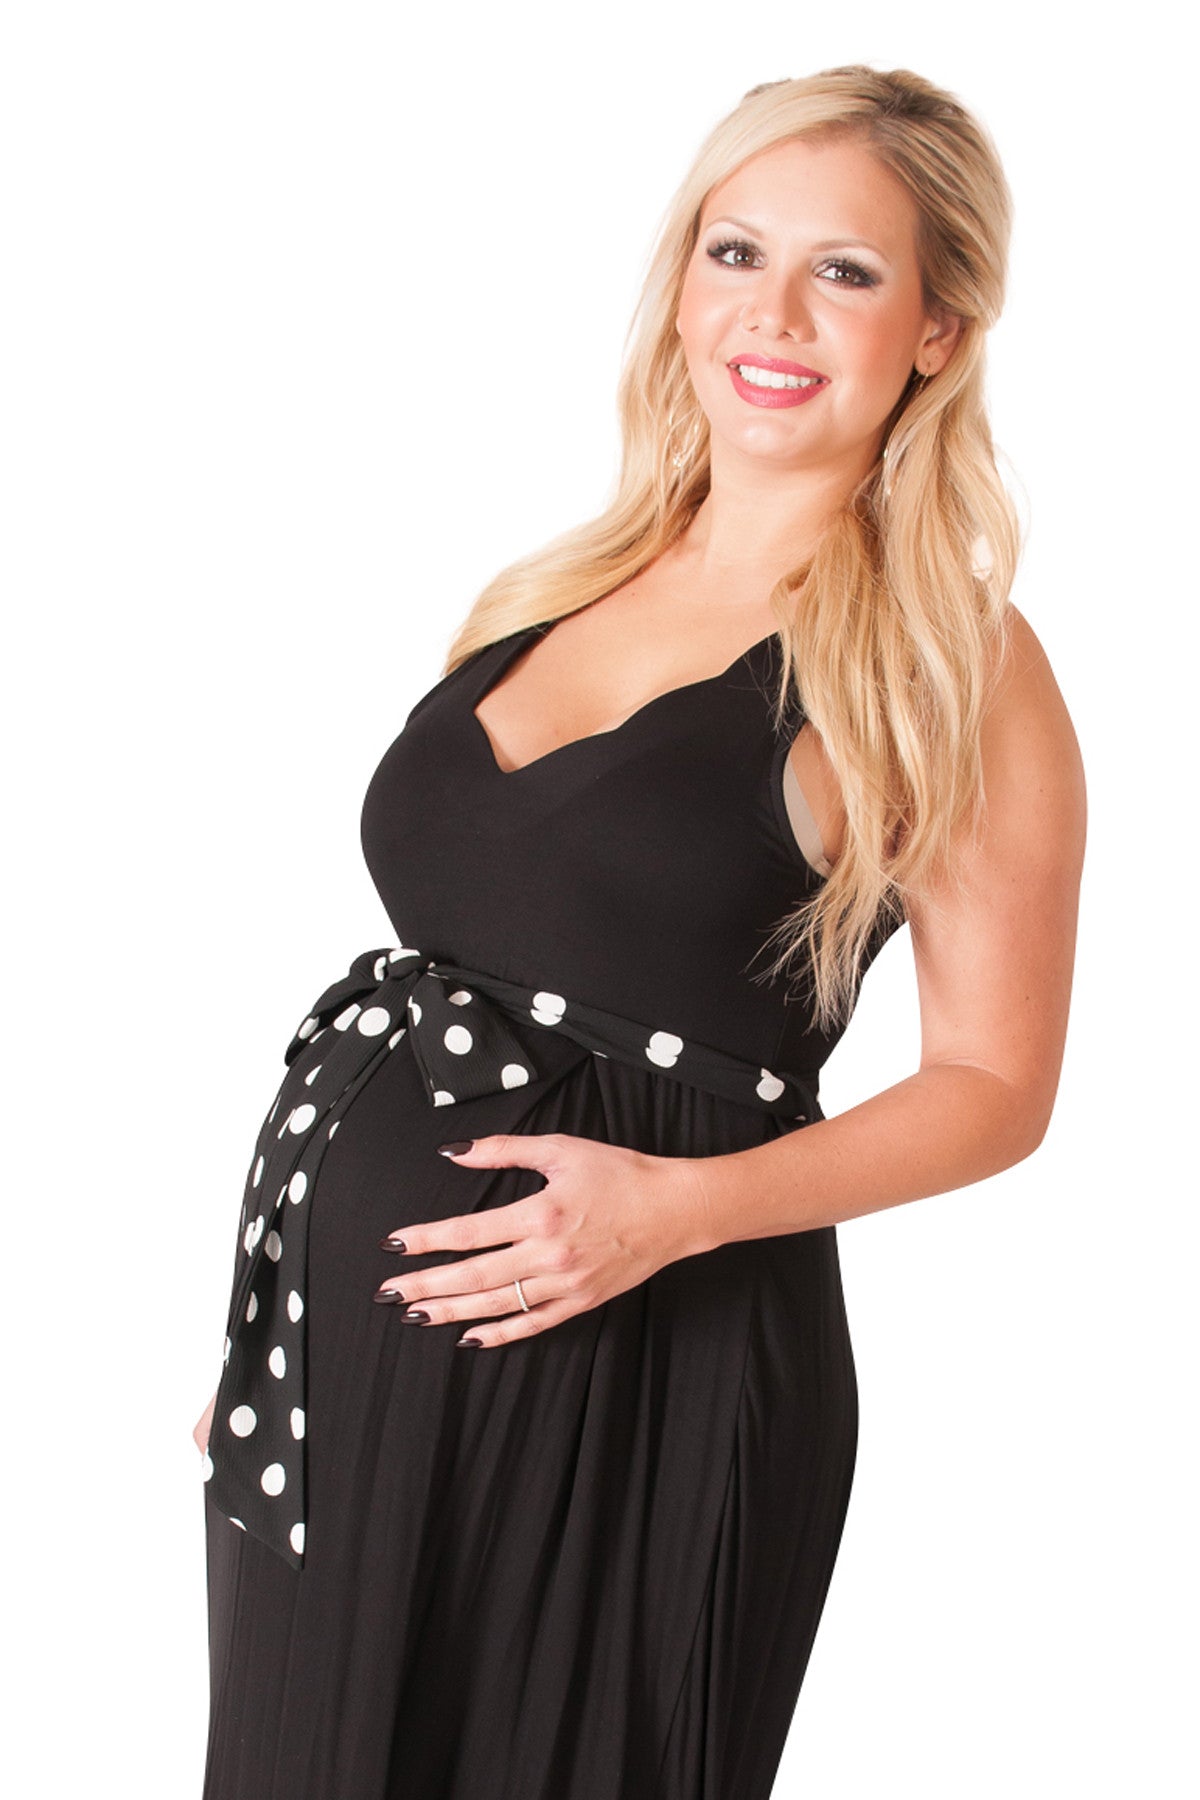 Maternity Maxi Dress - Mommylicious